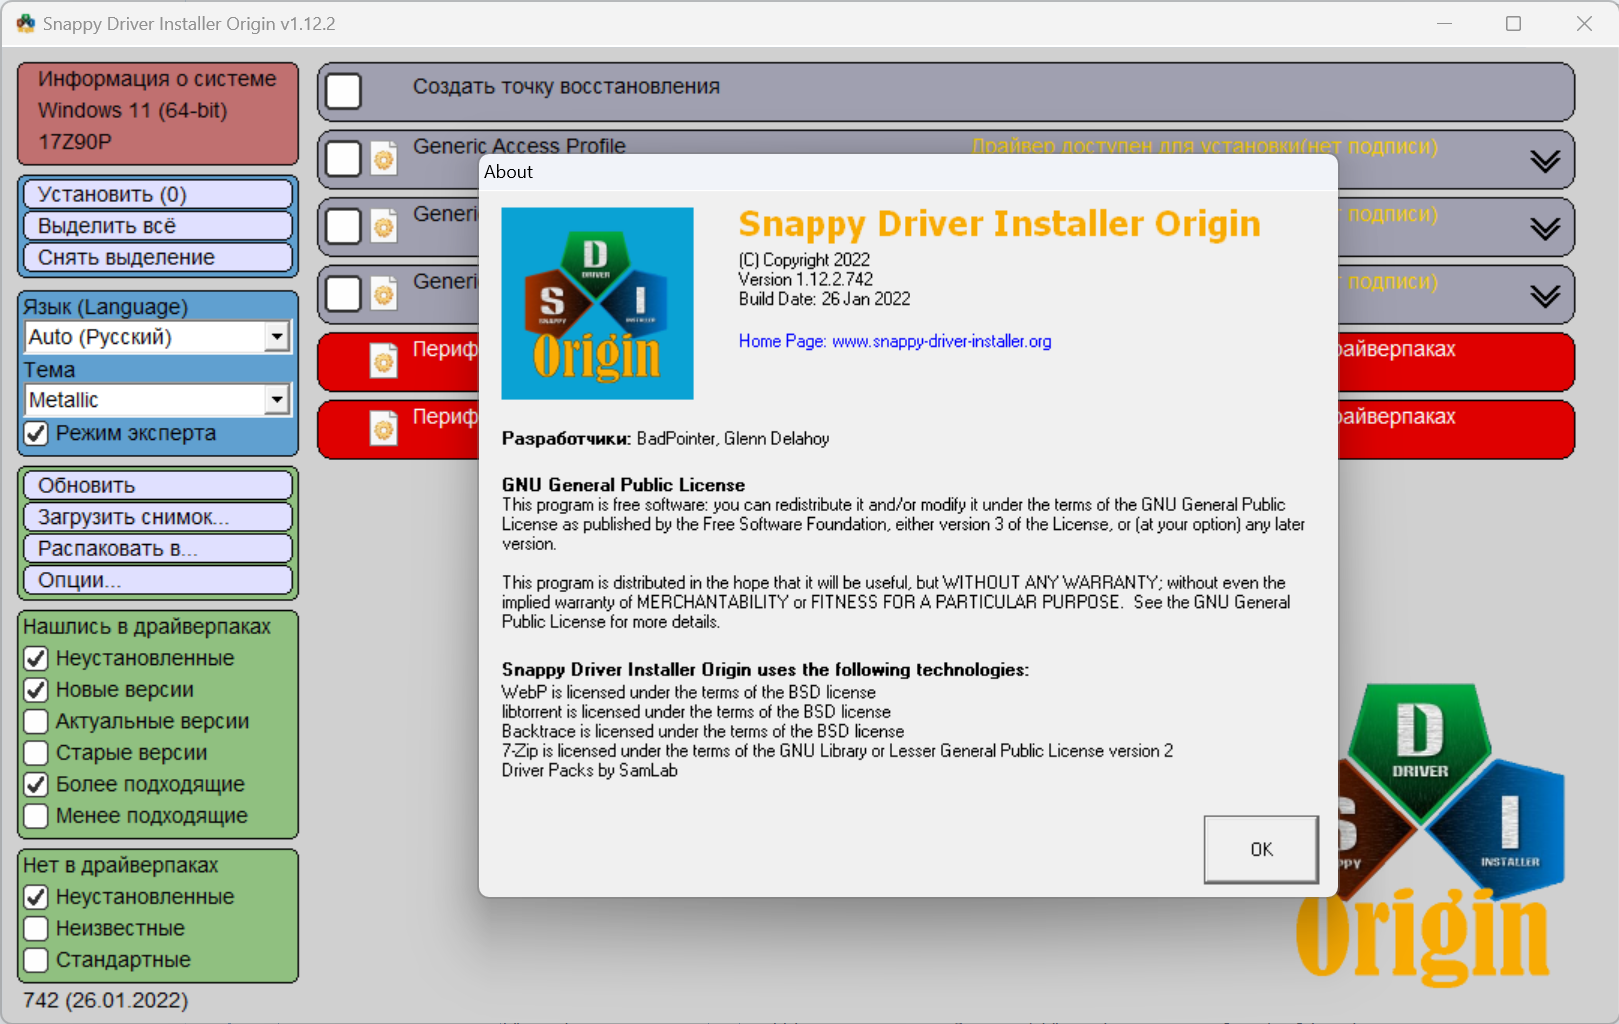 Snappy Driver Installer Origin R742 / Драйверпаки 22.03.1 [Multi/Ru]